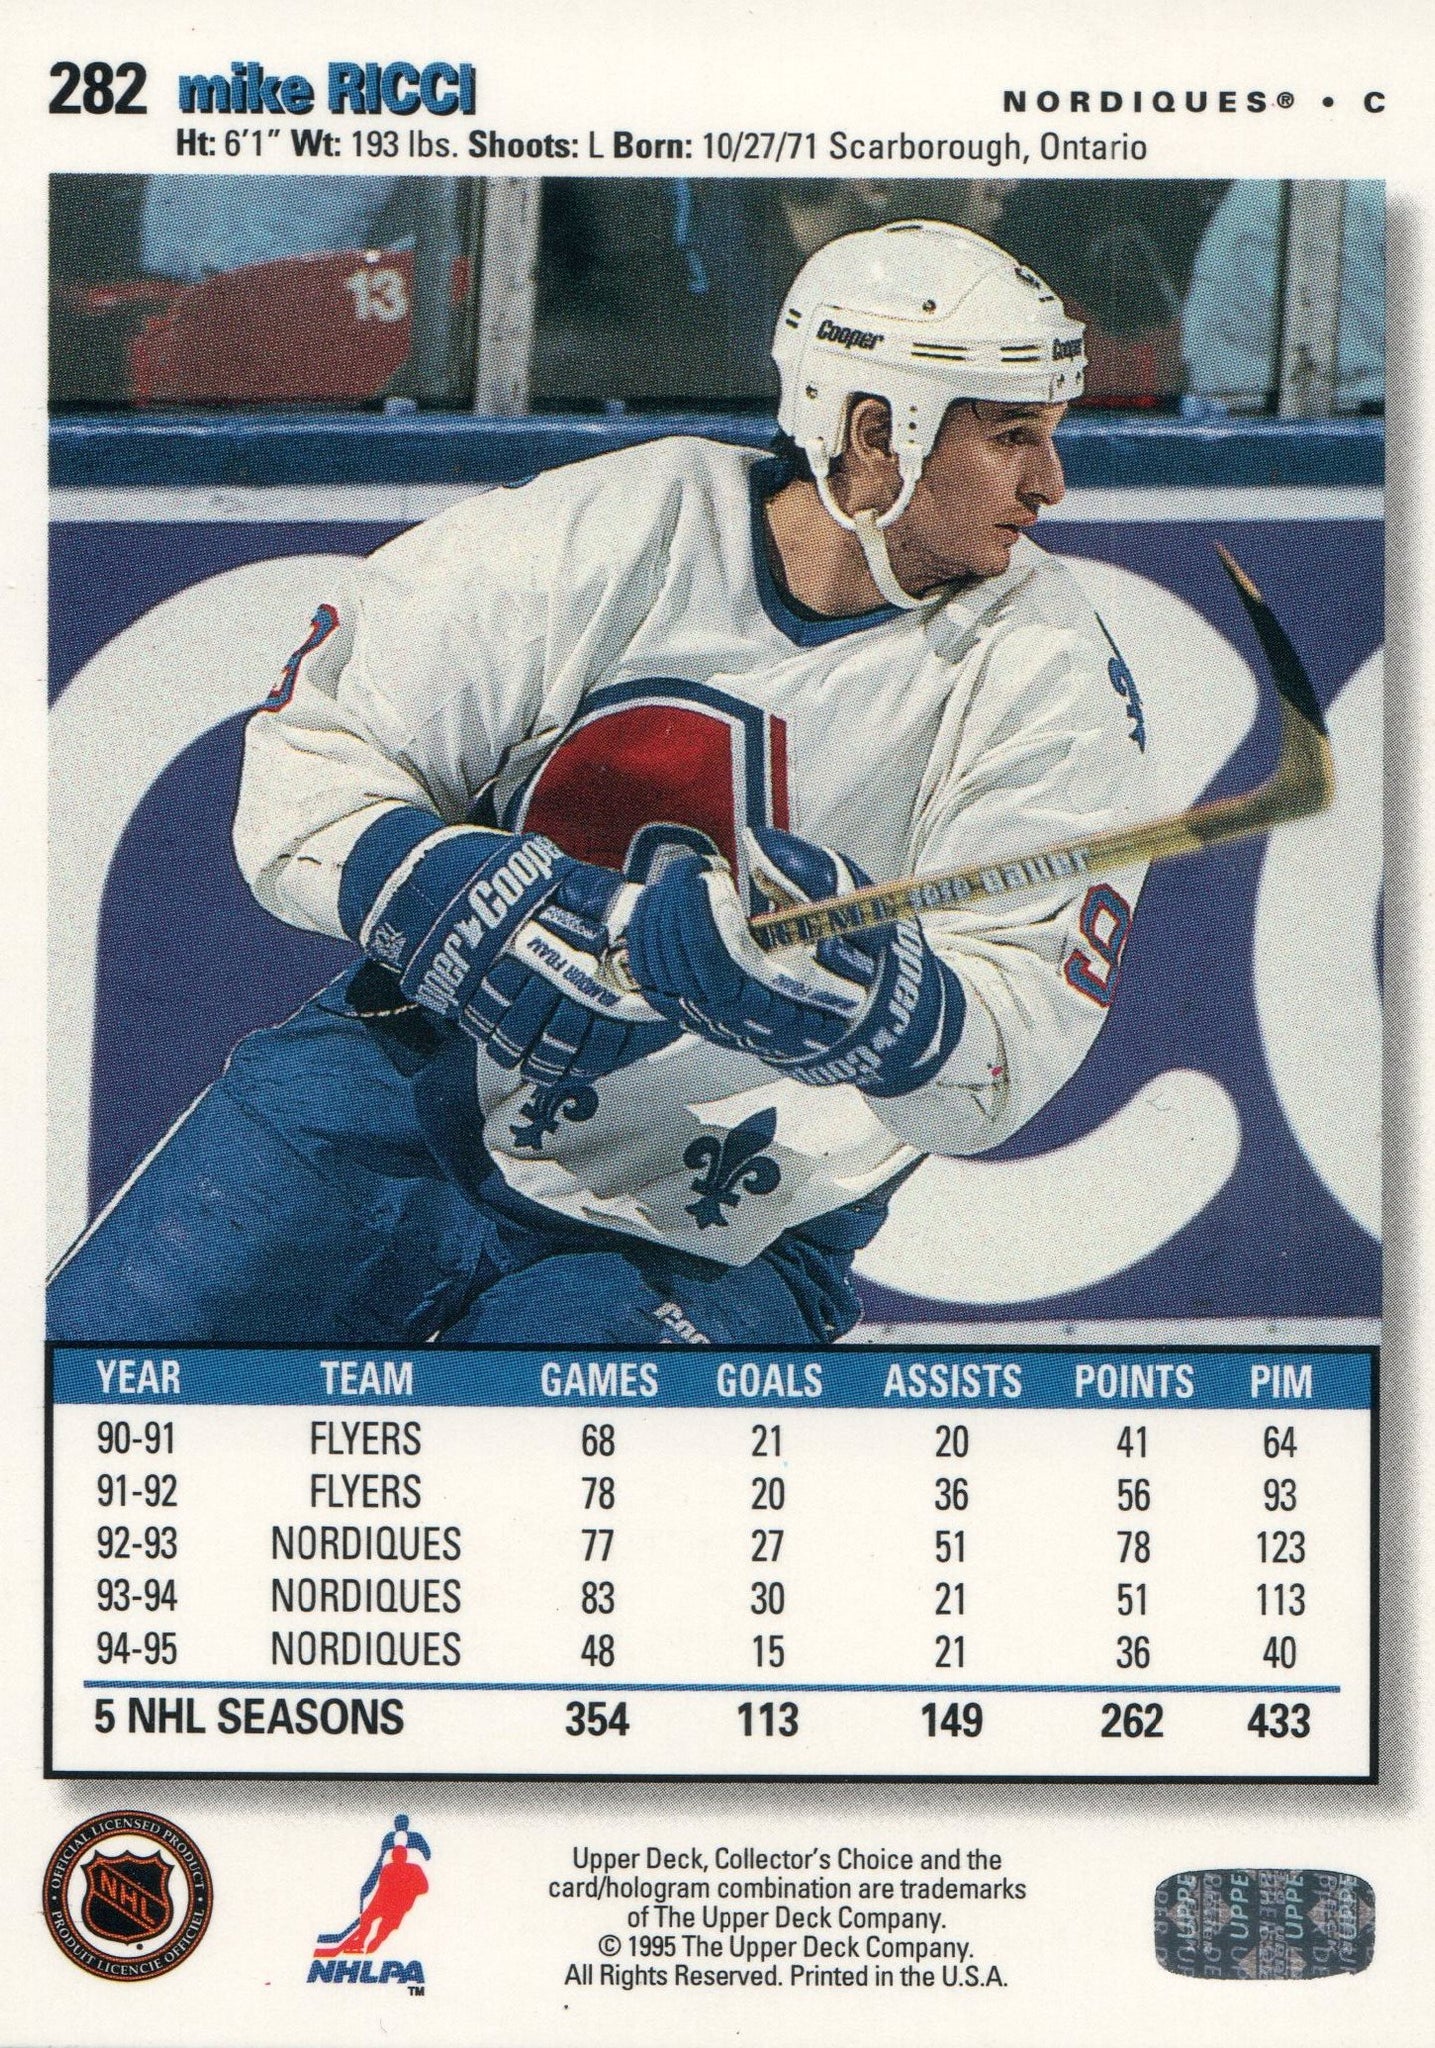 Quebec Nordiques proposed 1995-96 jerseys